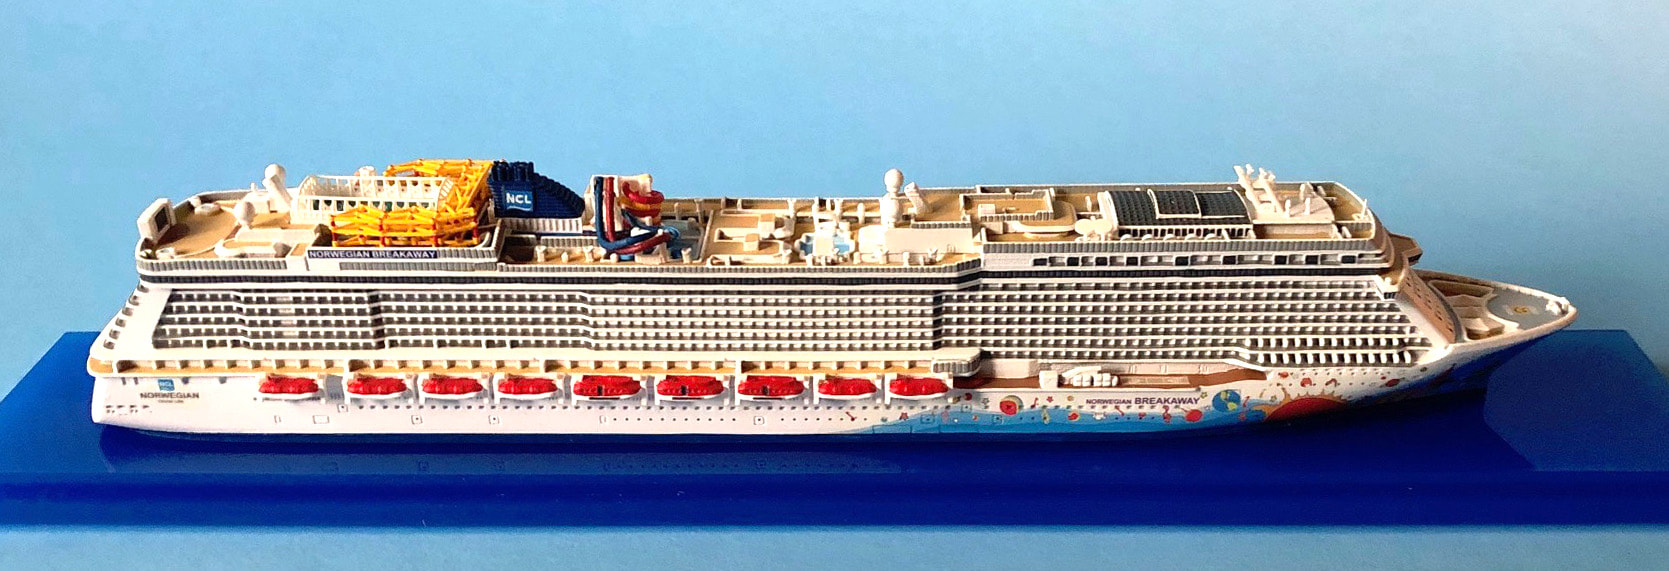 Norwegian Breakaway  1:1250 scale cruise ship model